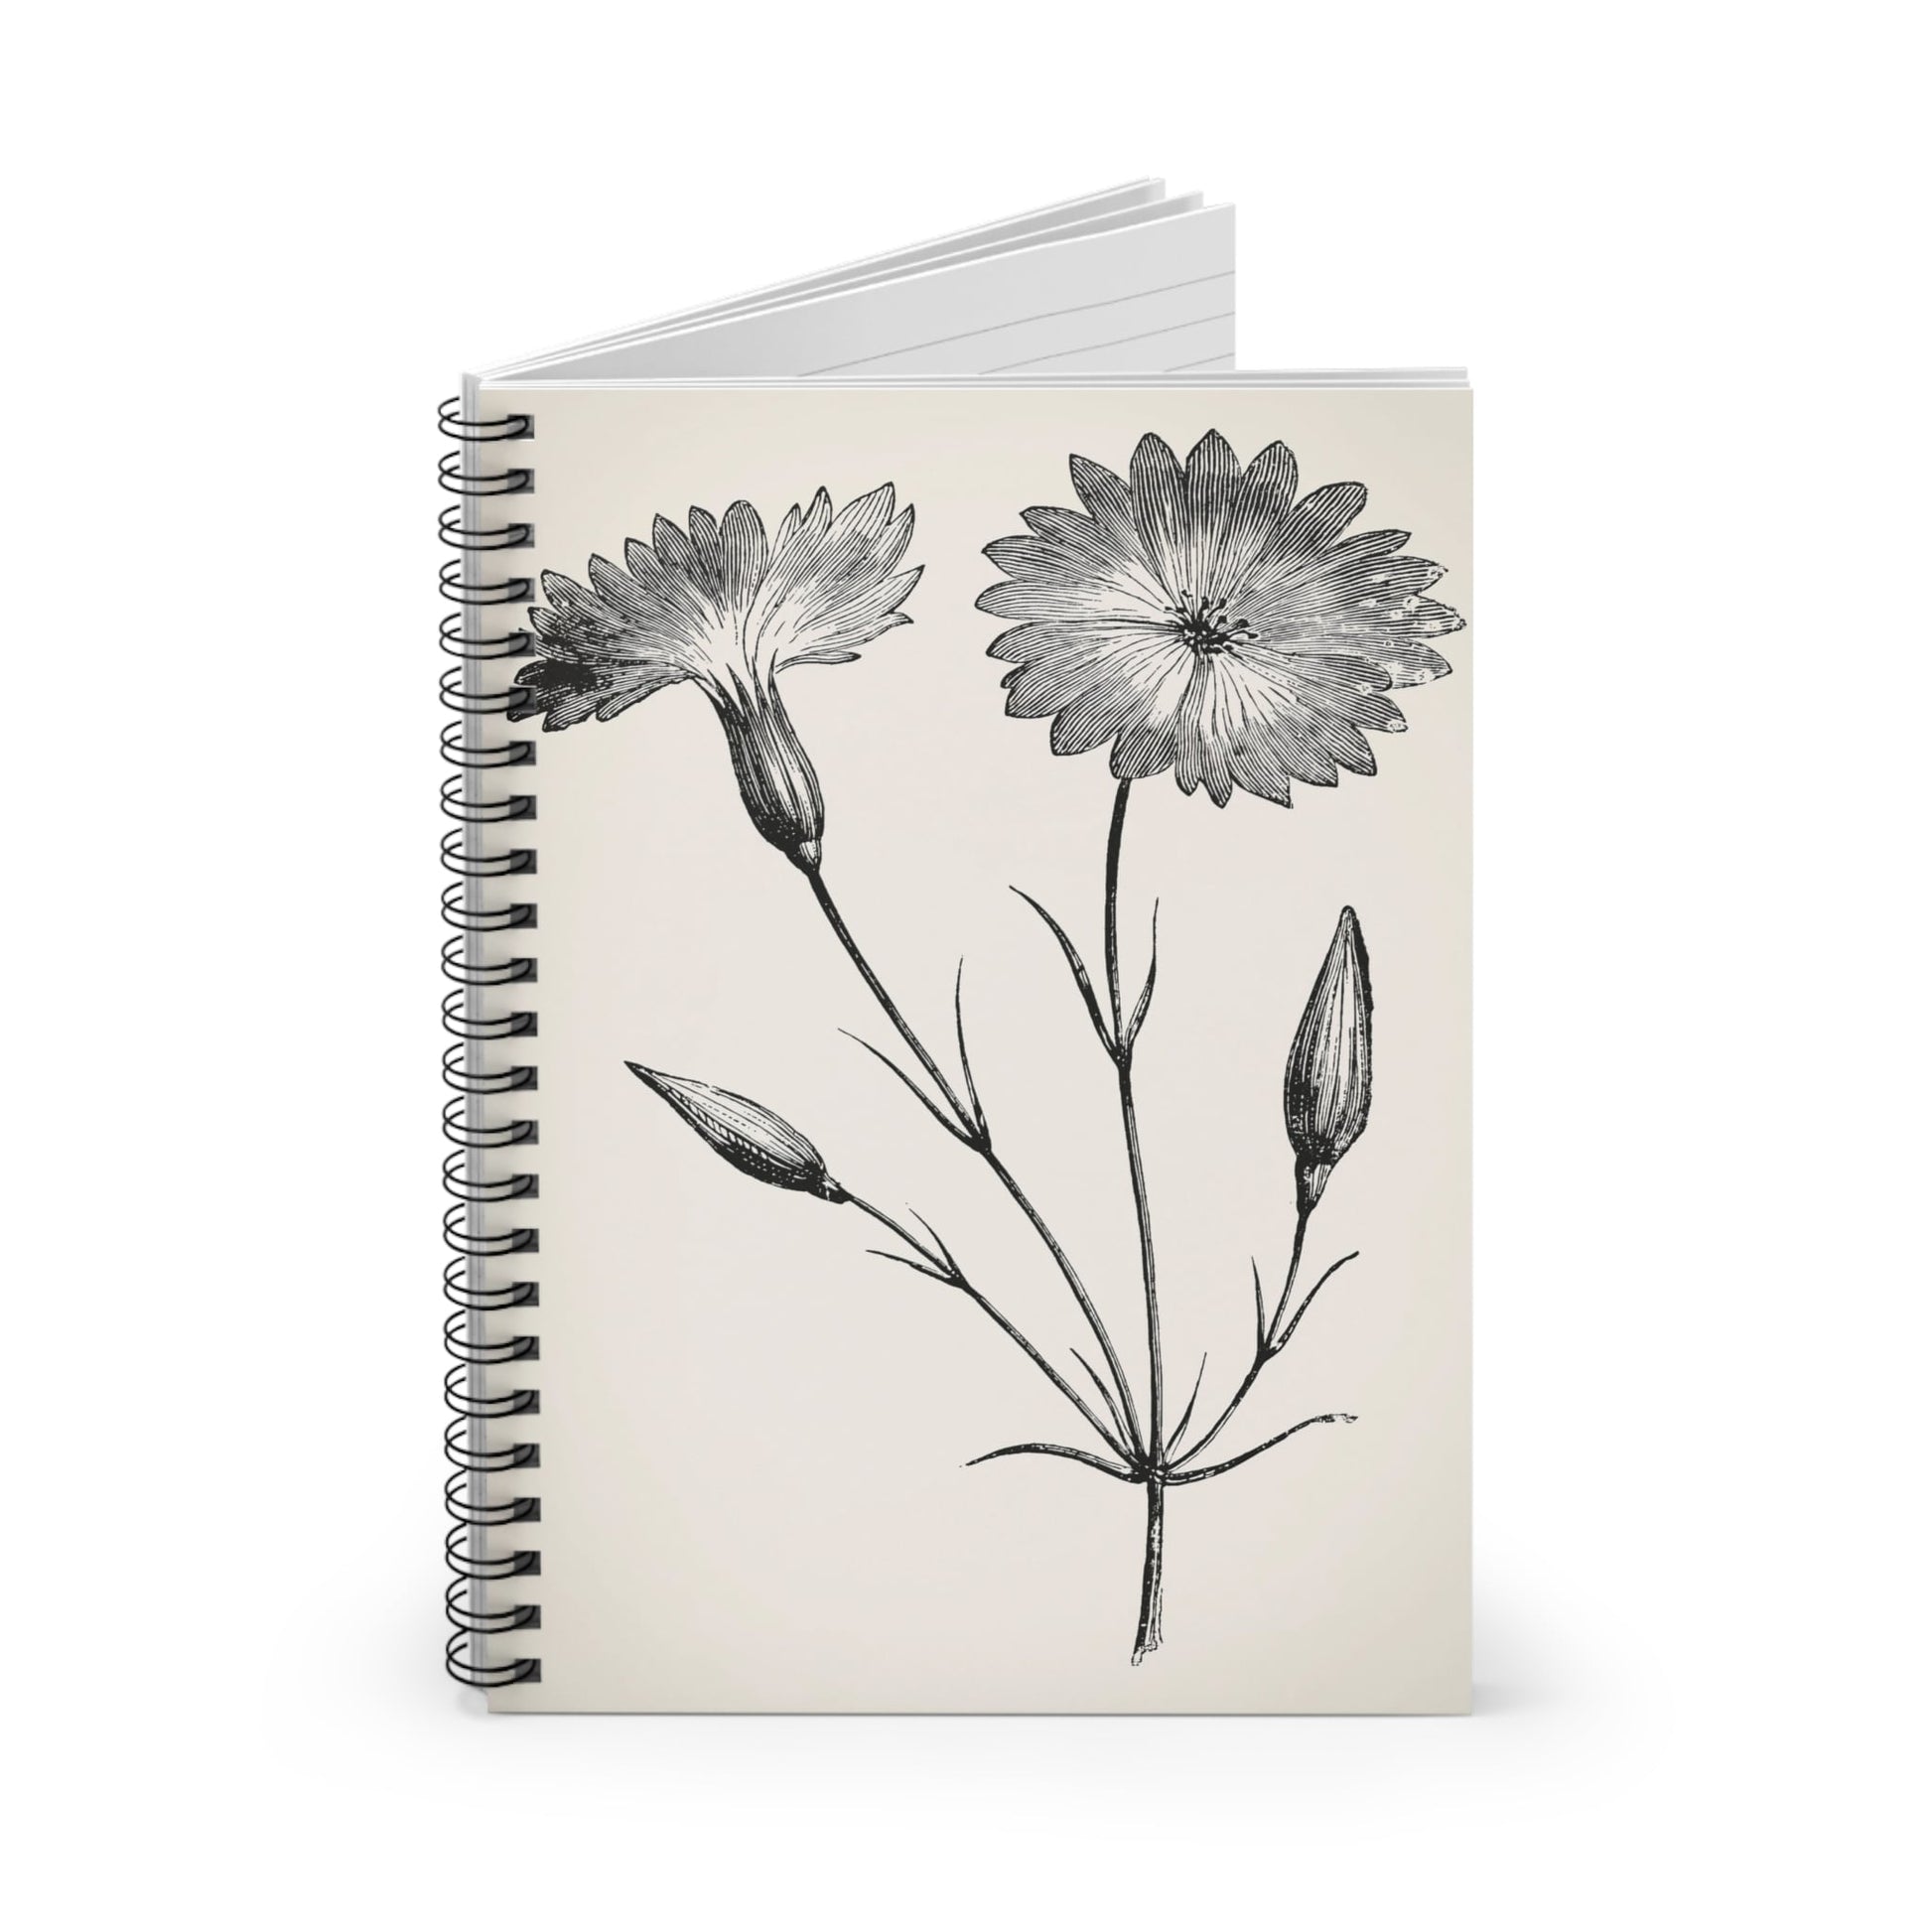 Floral Spiral Notebook Standing up on White Desk